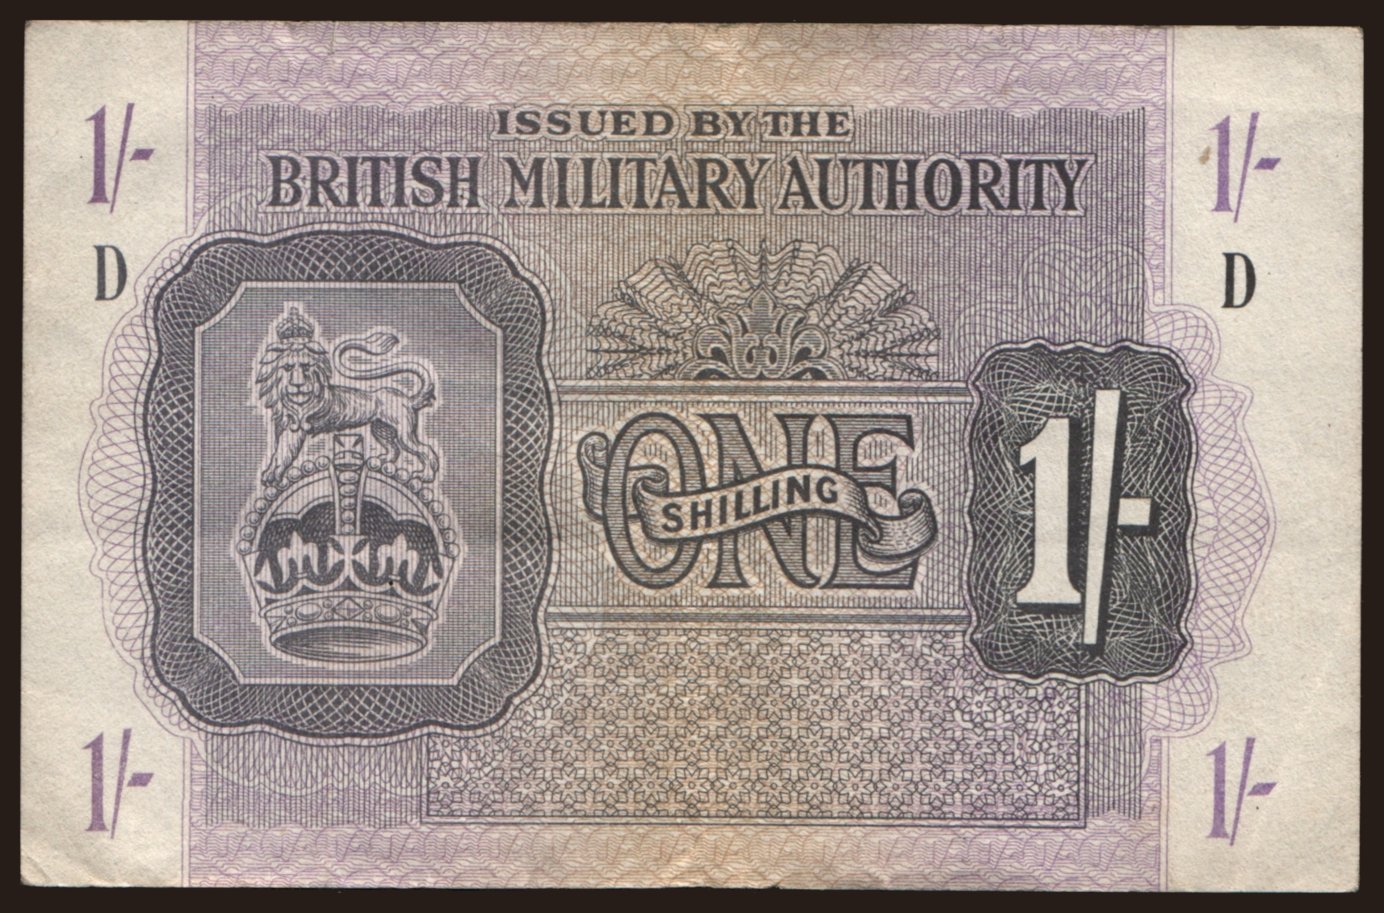 BMA, 1 shilling, 1943